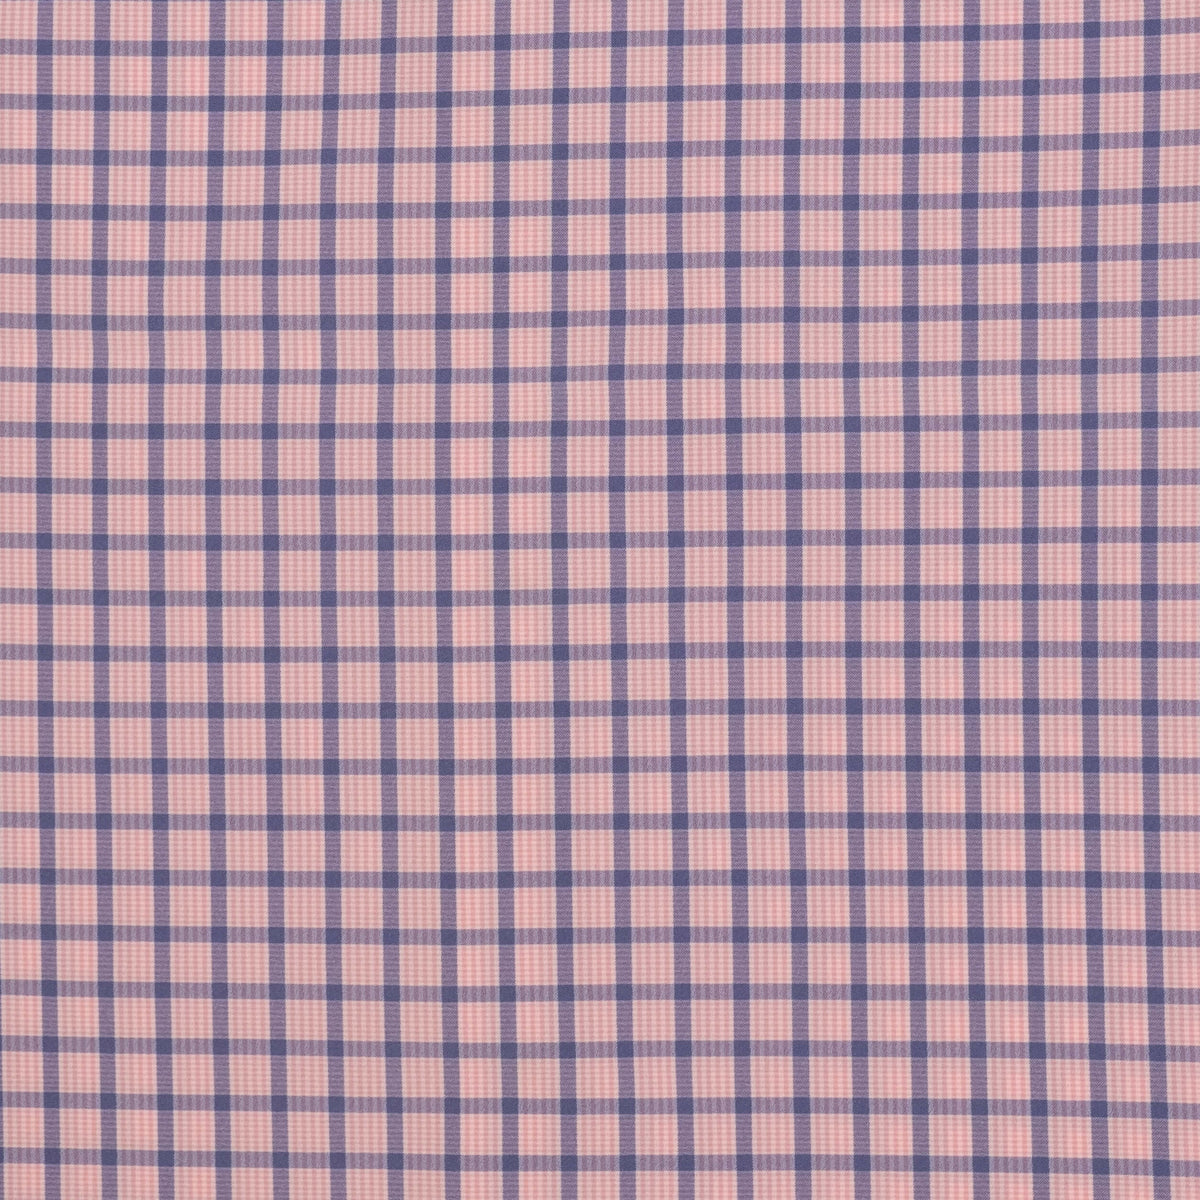 Marco Men’s Long Sleeve Pink Check Shirt